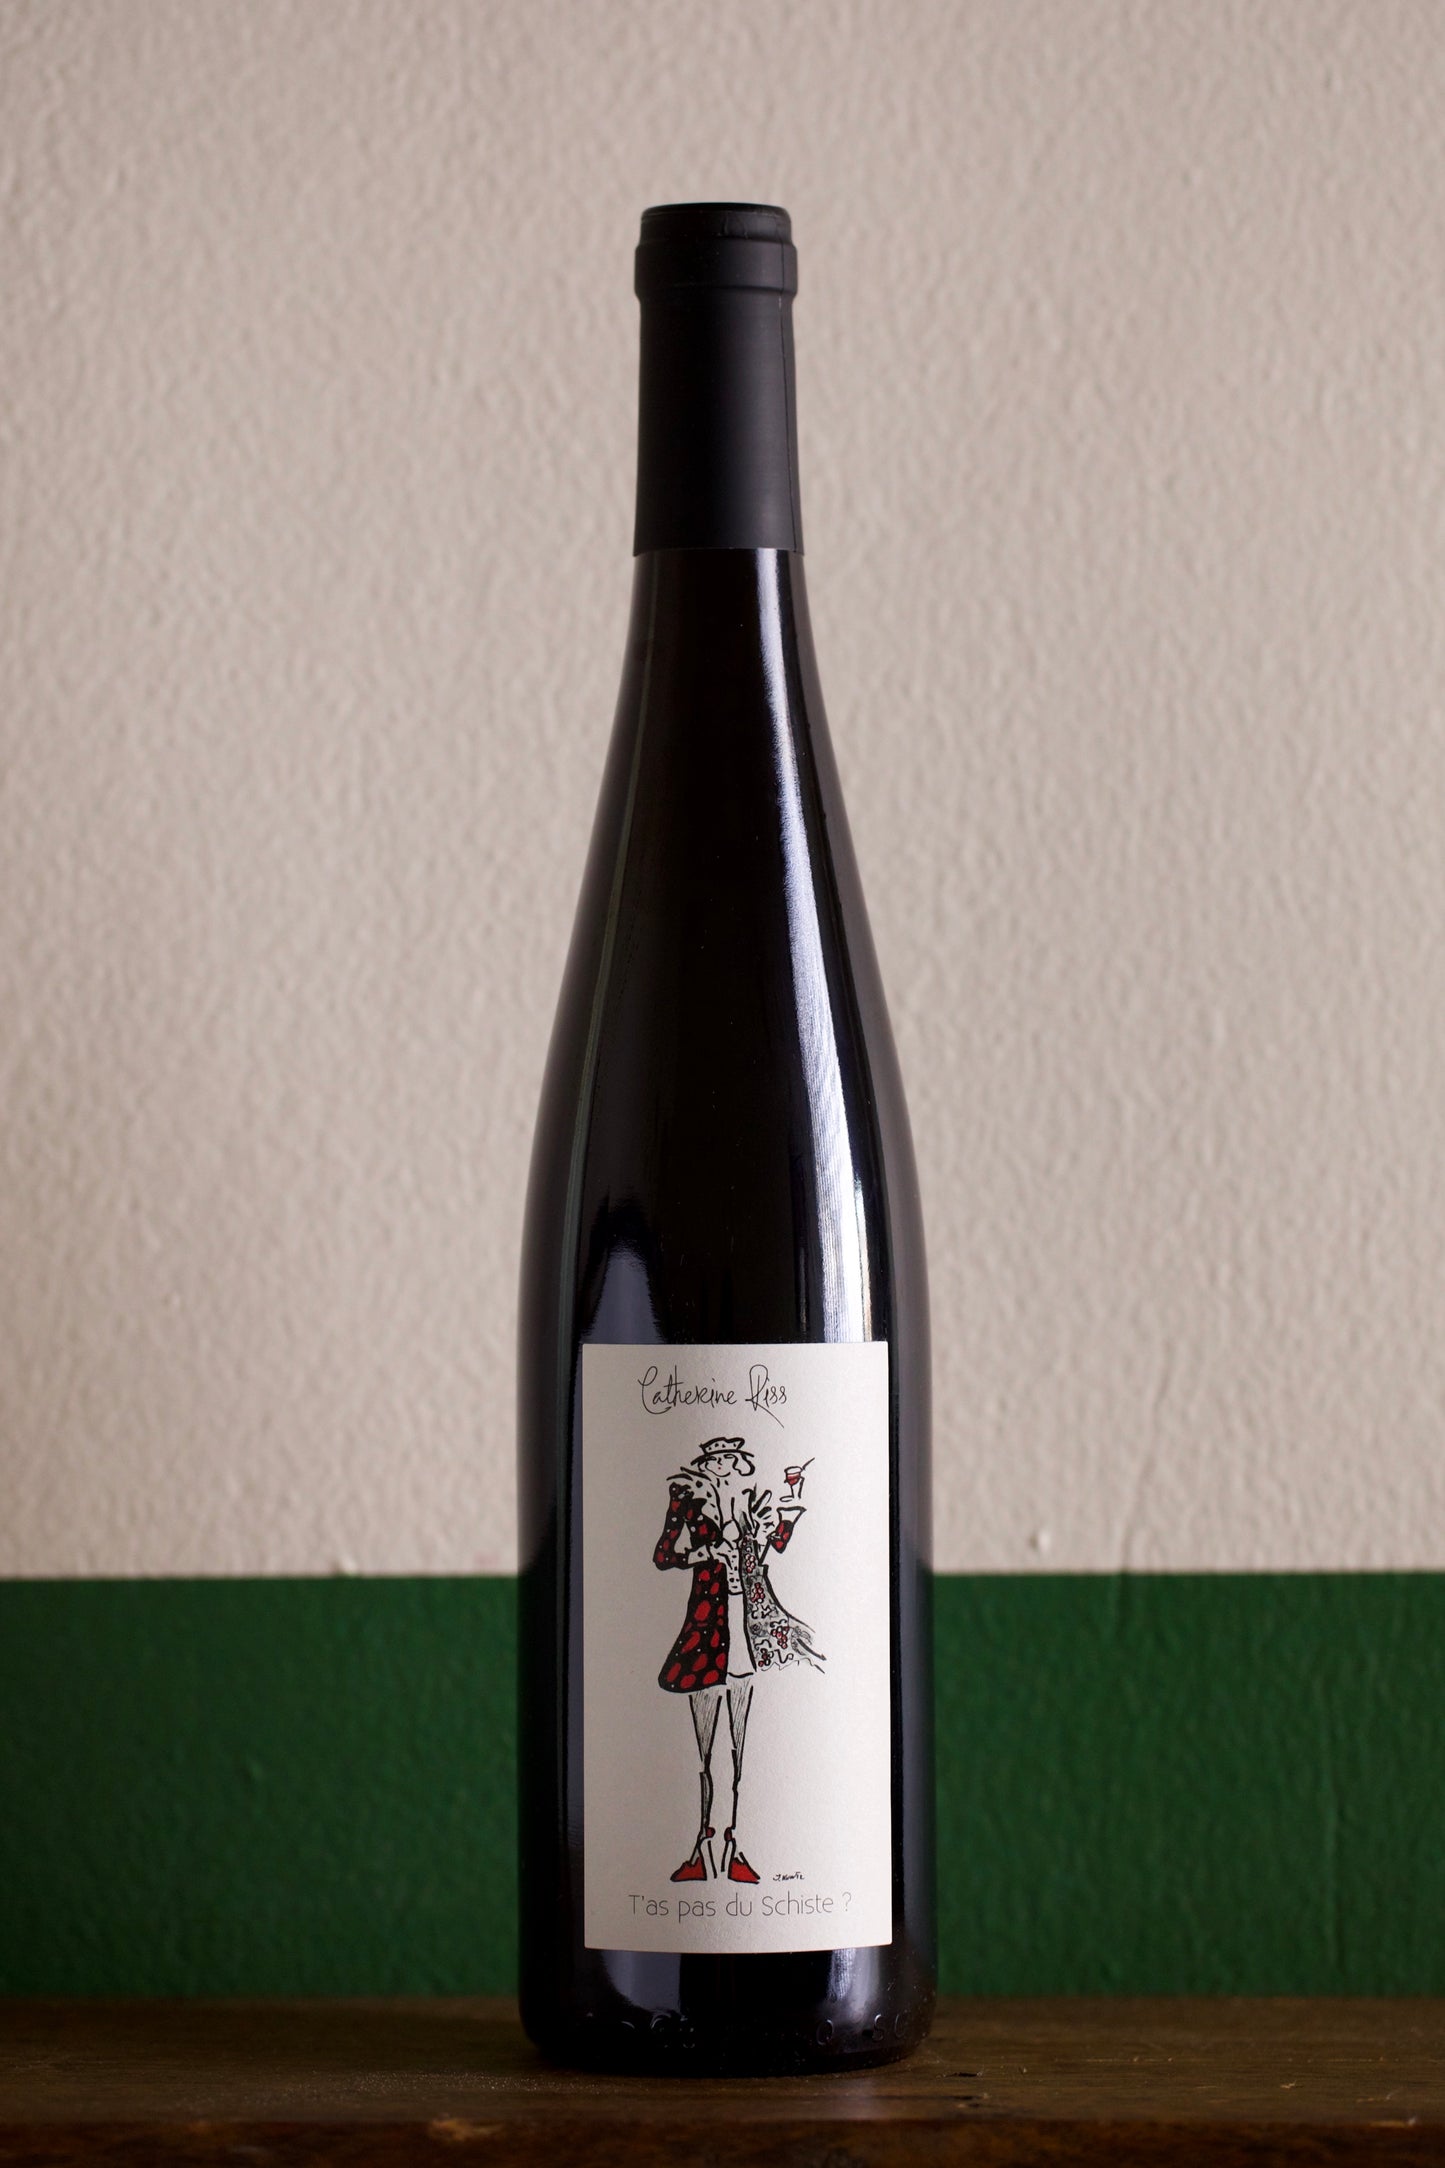 Bottle of Catherine Riss 'T'as pas du Schiste?' Pinot Noir 2019 750ml